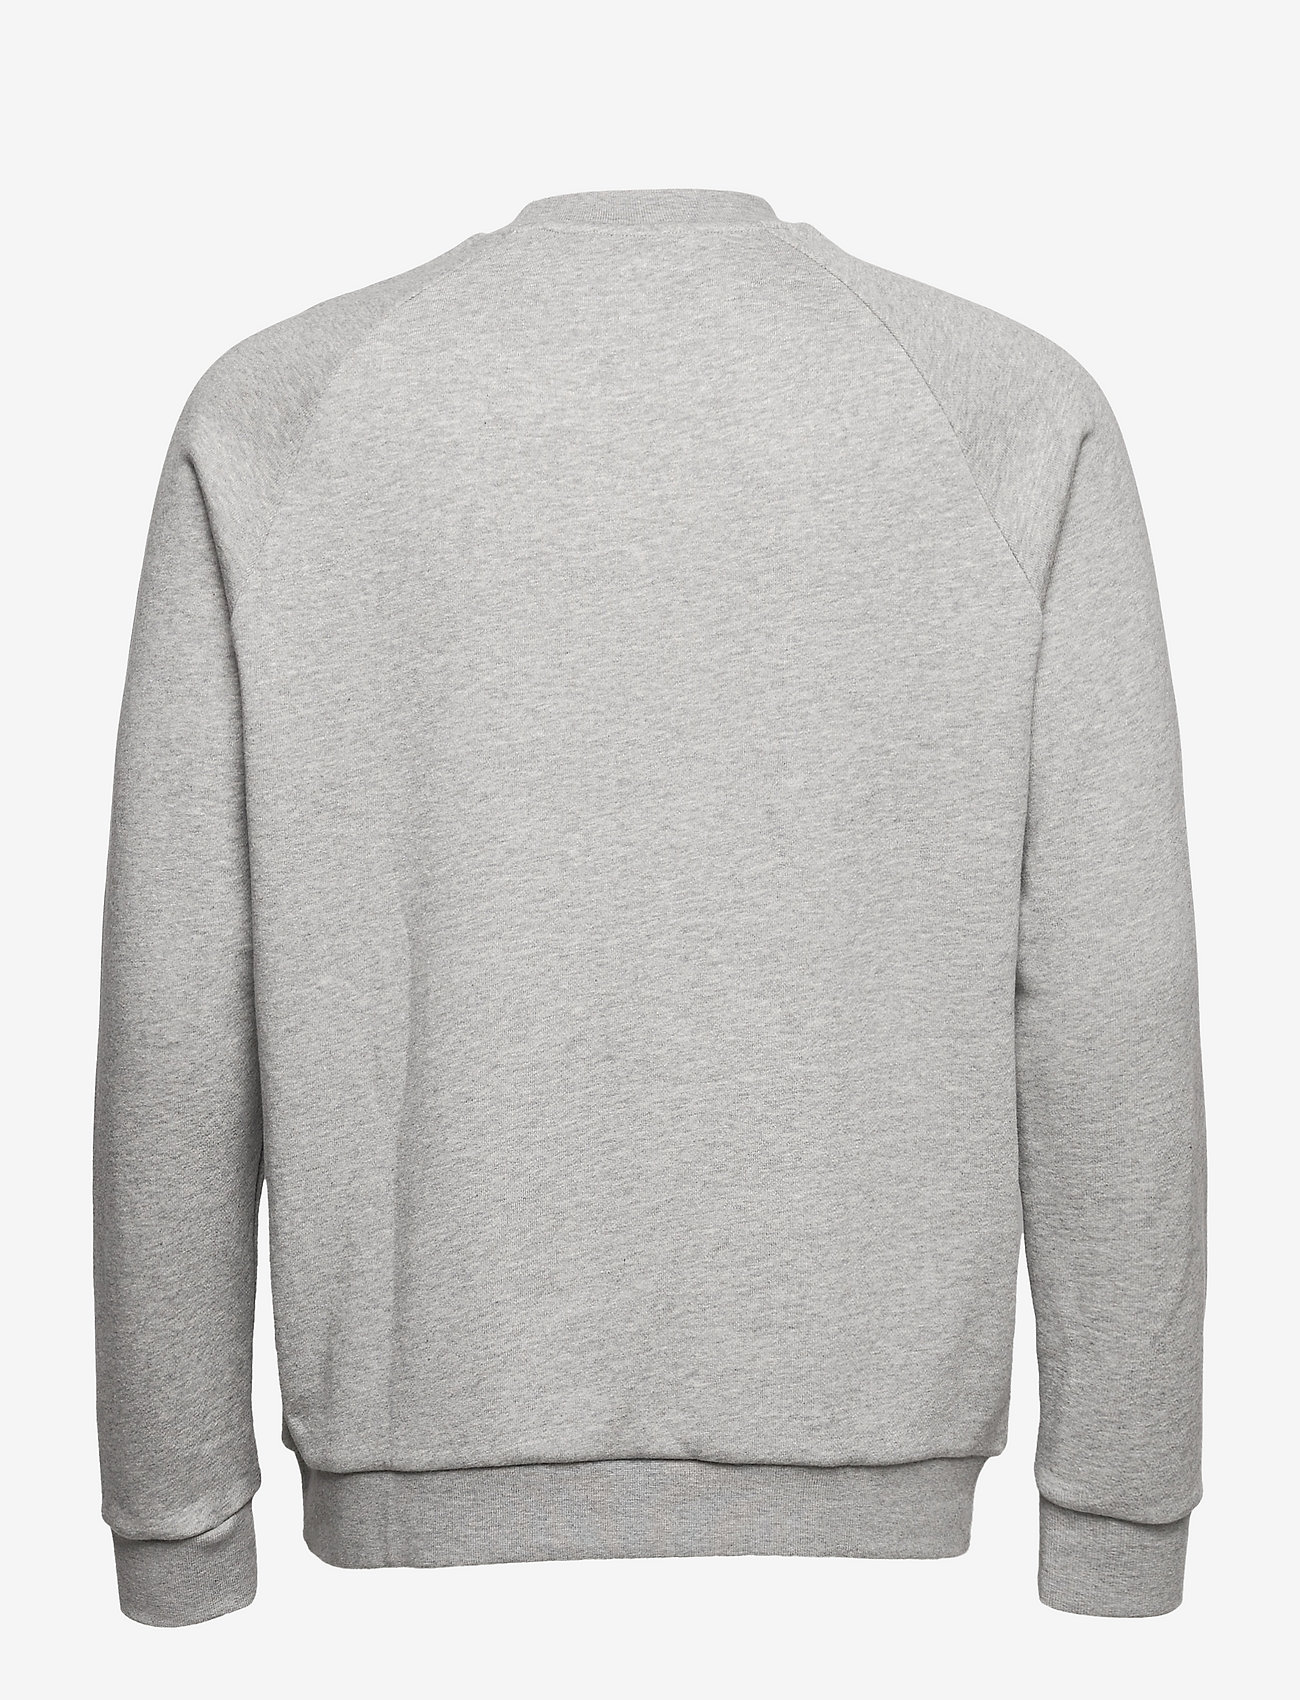 adidas Originals - Adicolor Classics Trefoil Crewneck Sweatshirt - mid layer jackets - mgreyh/white - 1